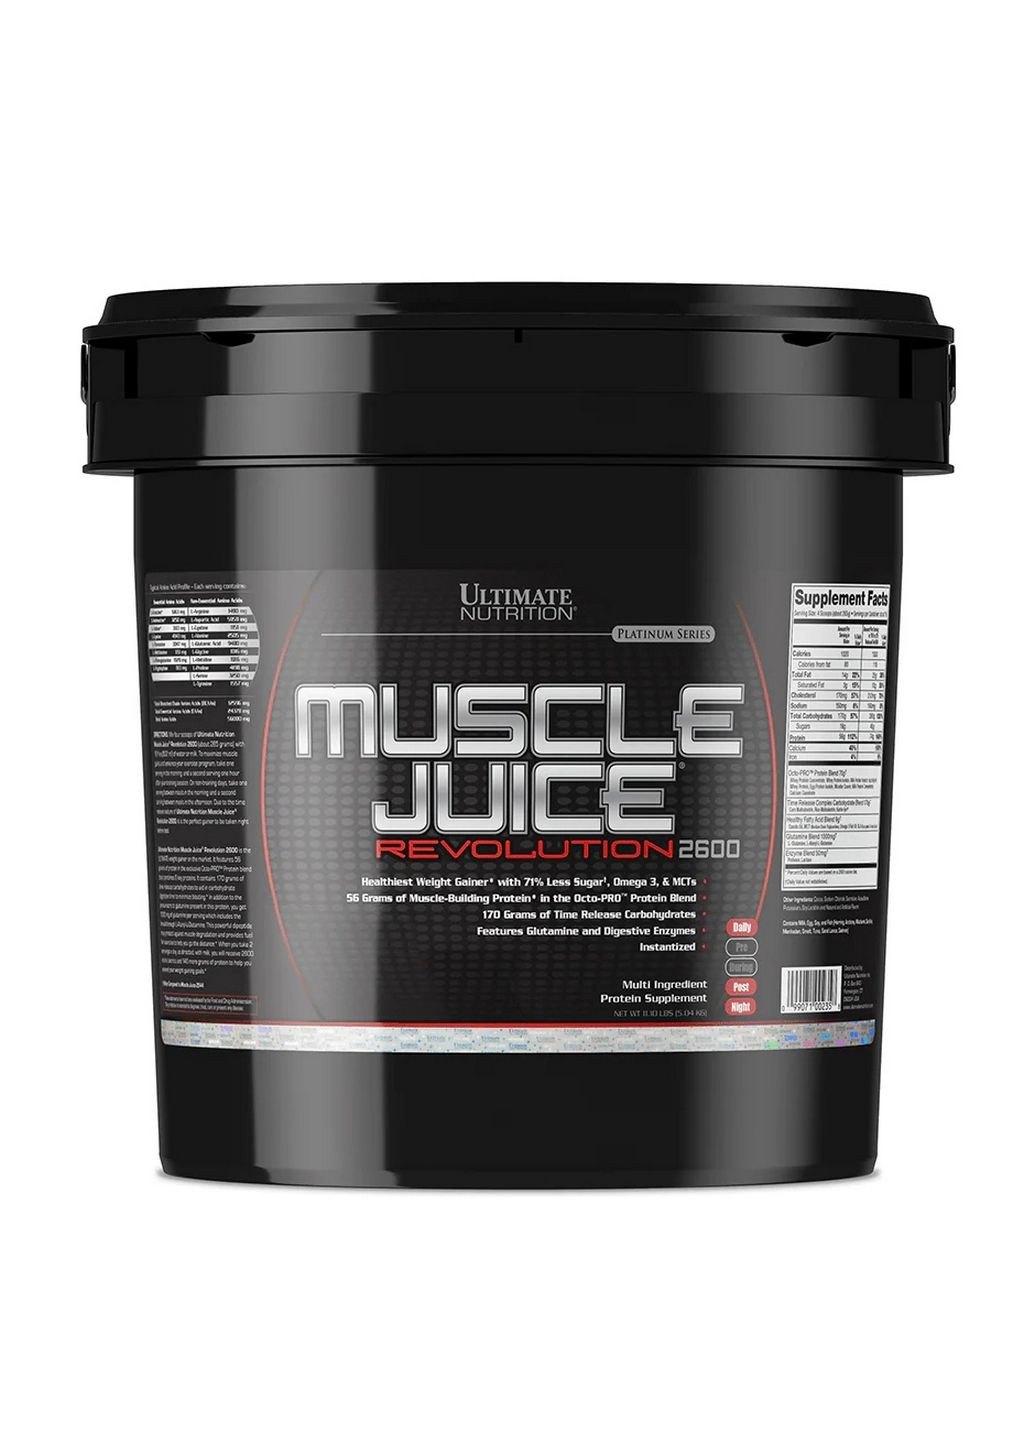 Гейнер Ultimate Muscle Juice Revolution 2600, 5 кг Клубника Ultimate Nutrition (293417839)